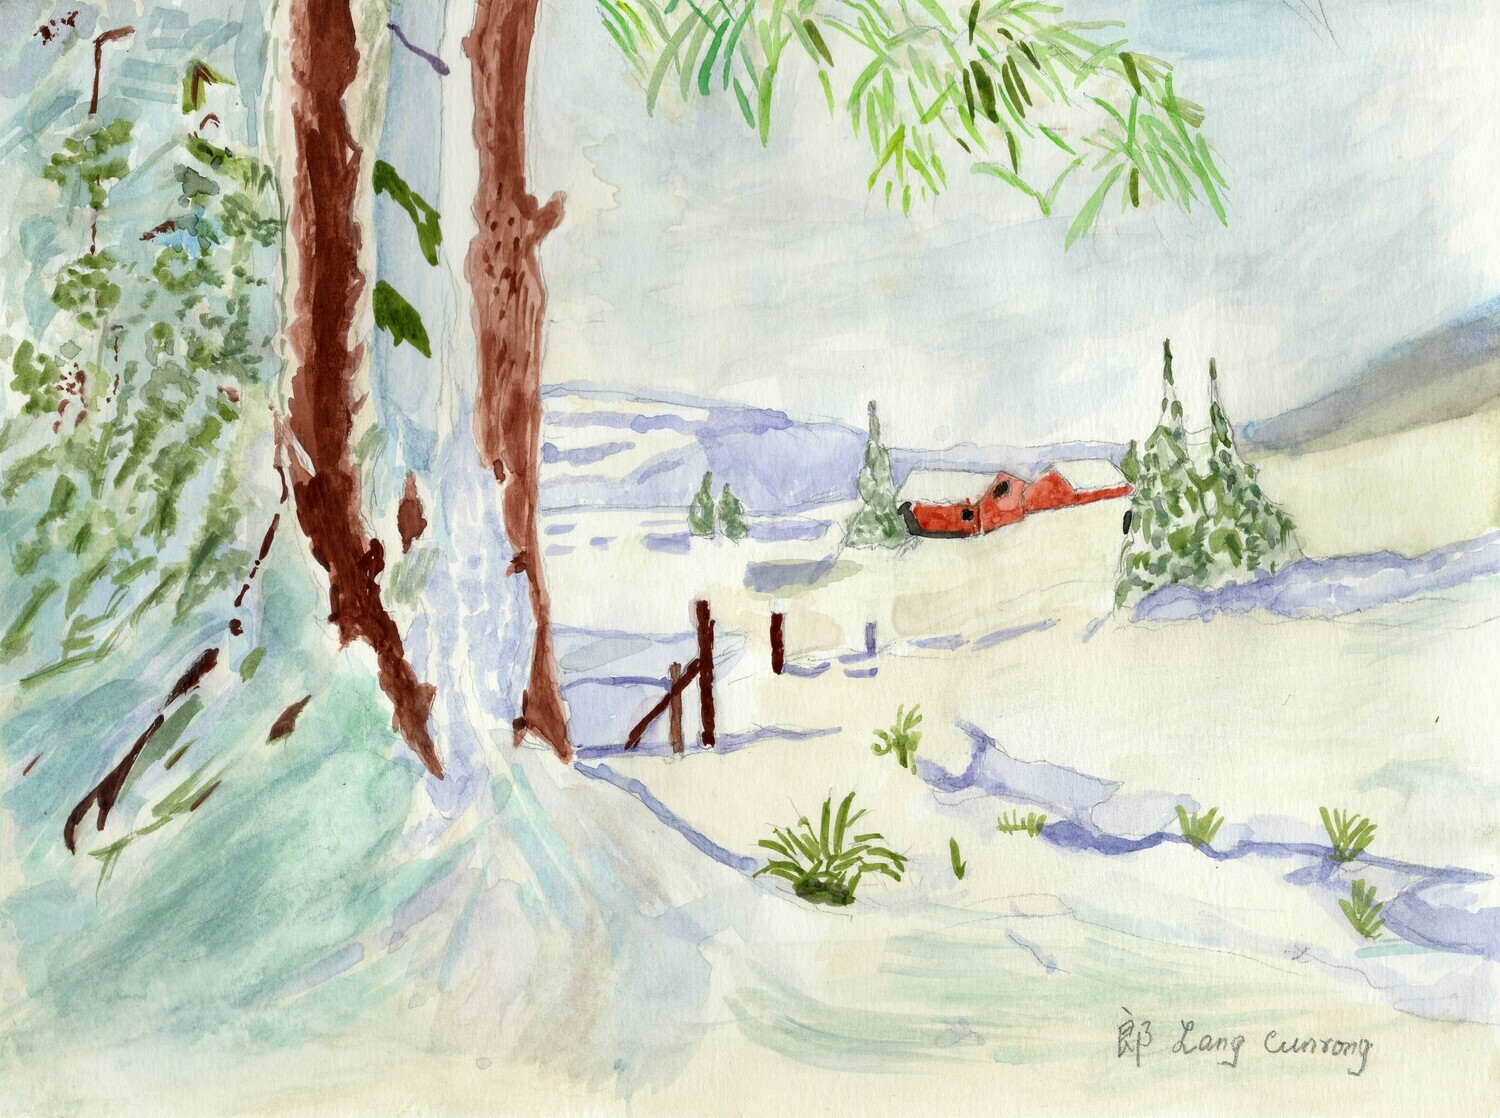 Art - Lang, Cunrong - Snow in December